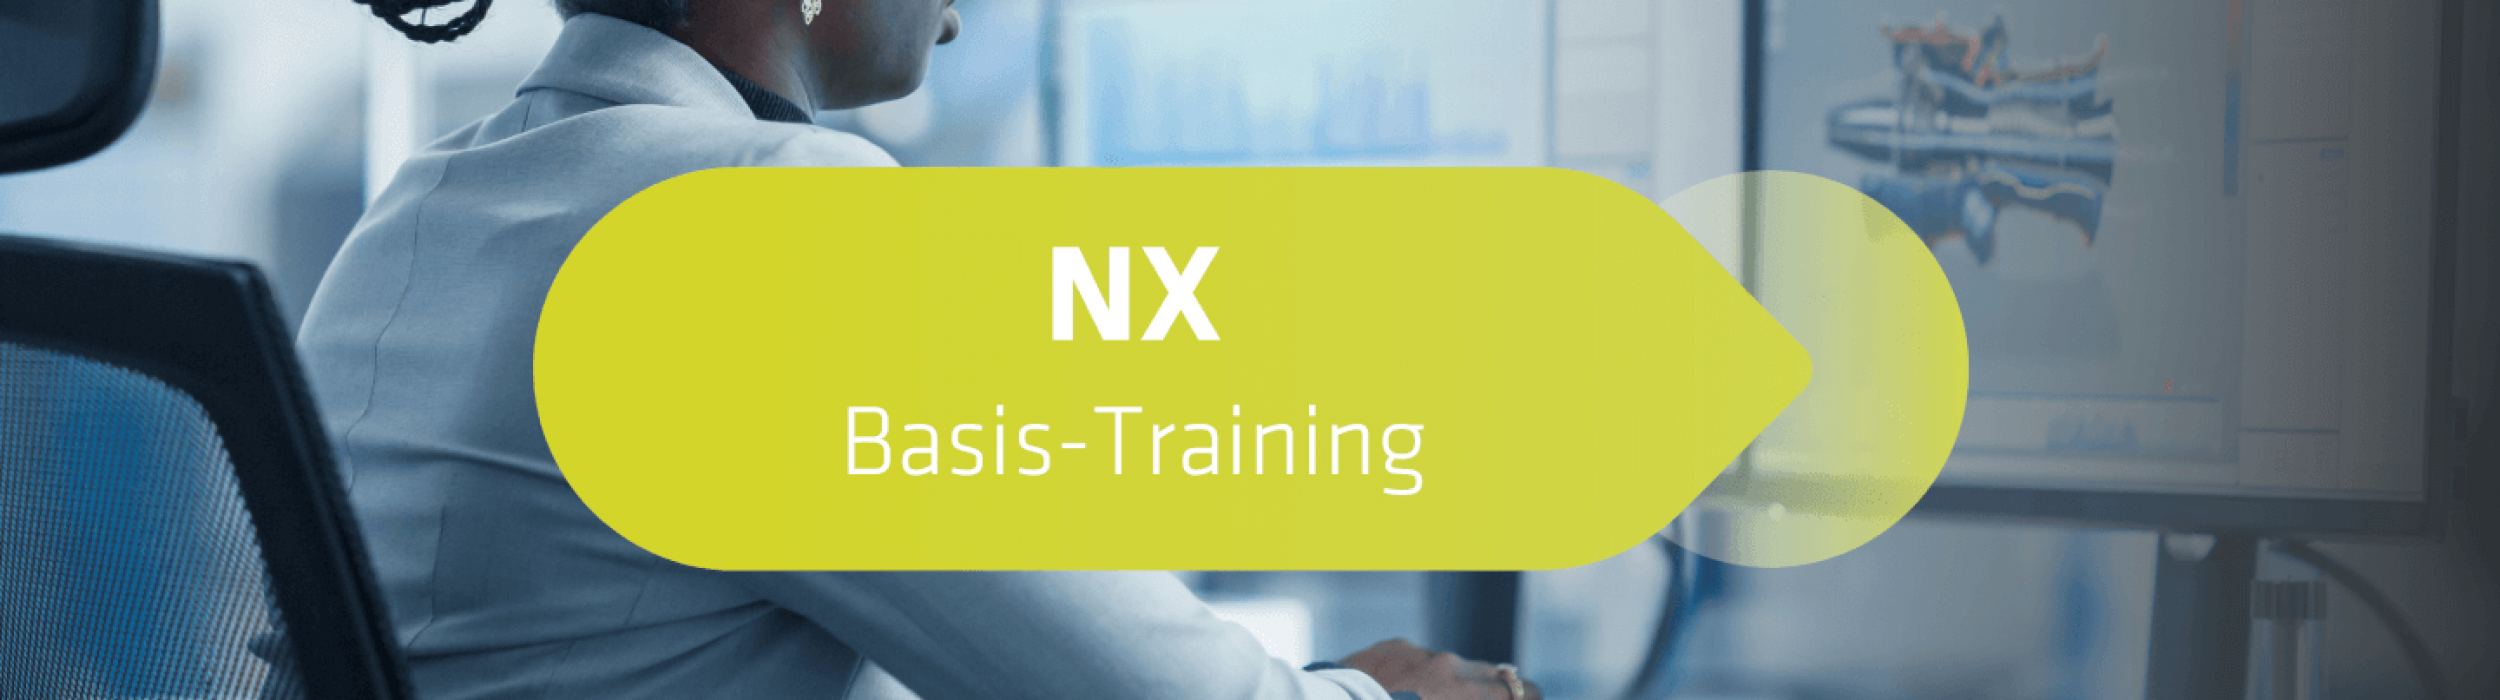 NX Basis-Training